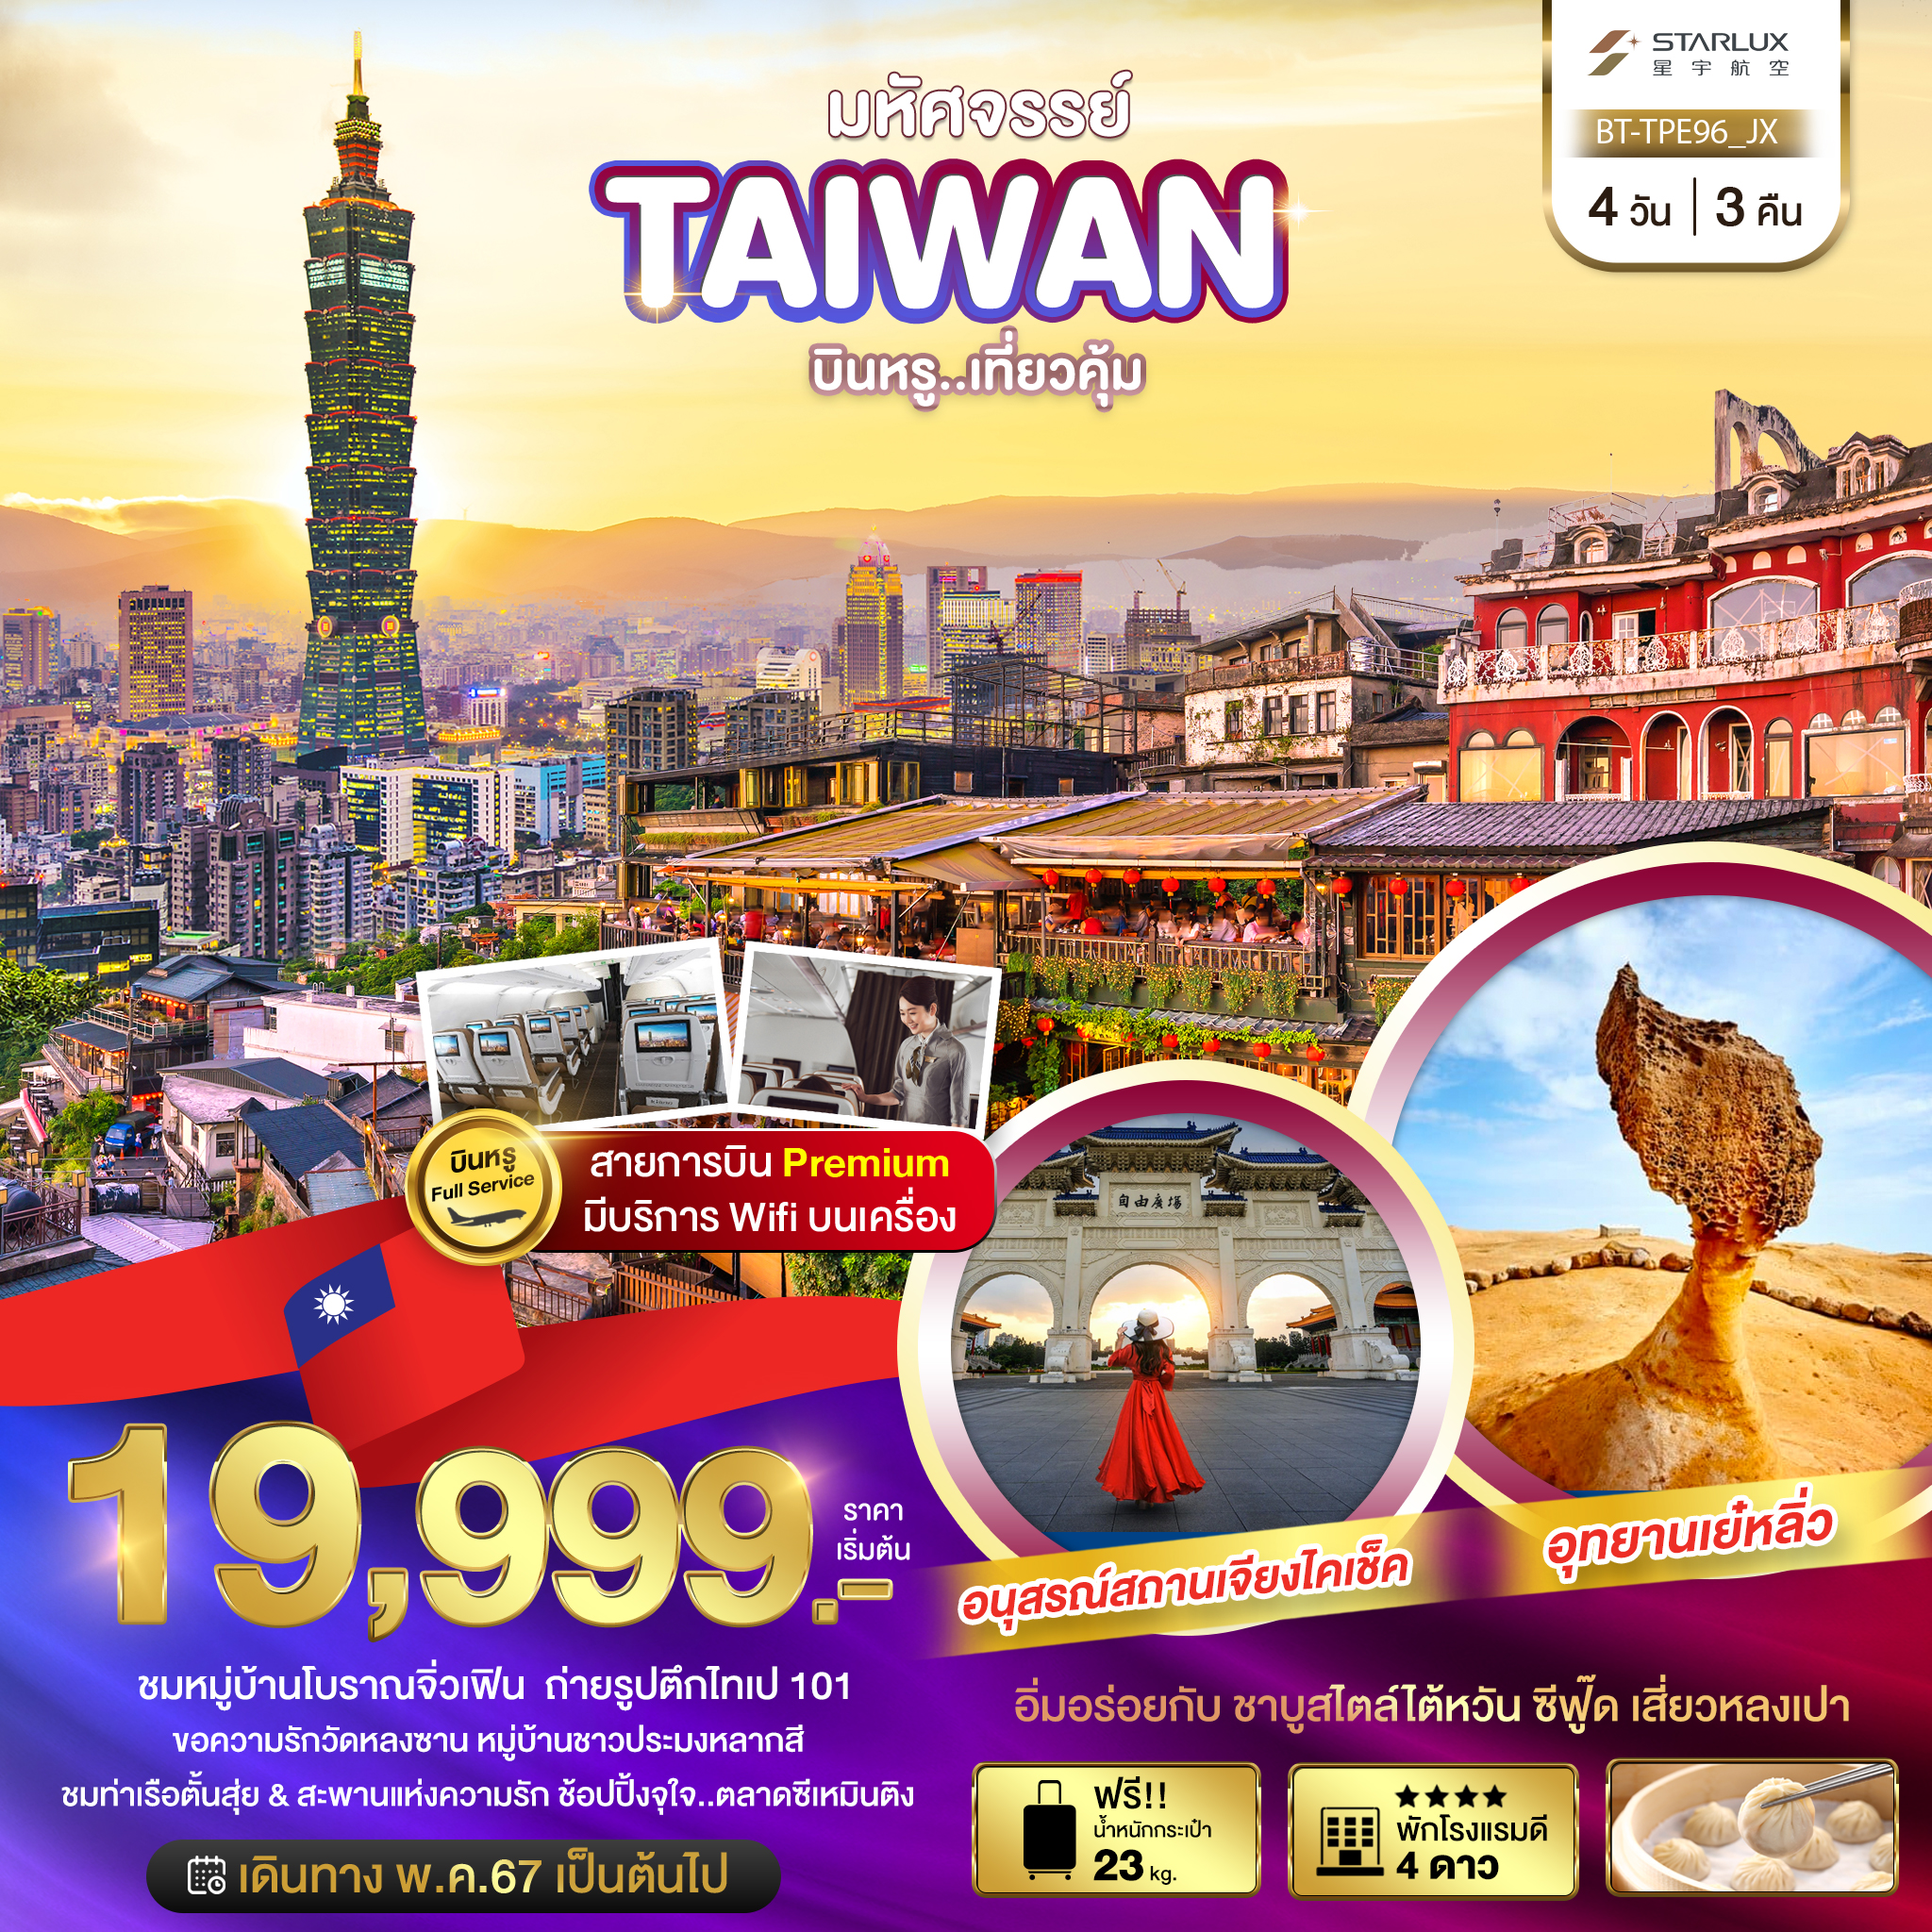 TAIWAN ไต้หวัน บินหรู...เที่ยวคุ้ม 4 วัน 3 คืน เดินทาง พฤษภาคม - มิถุนายน 67 เริ่มต้น 19,999.- STARLUX Airlines (JX)